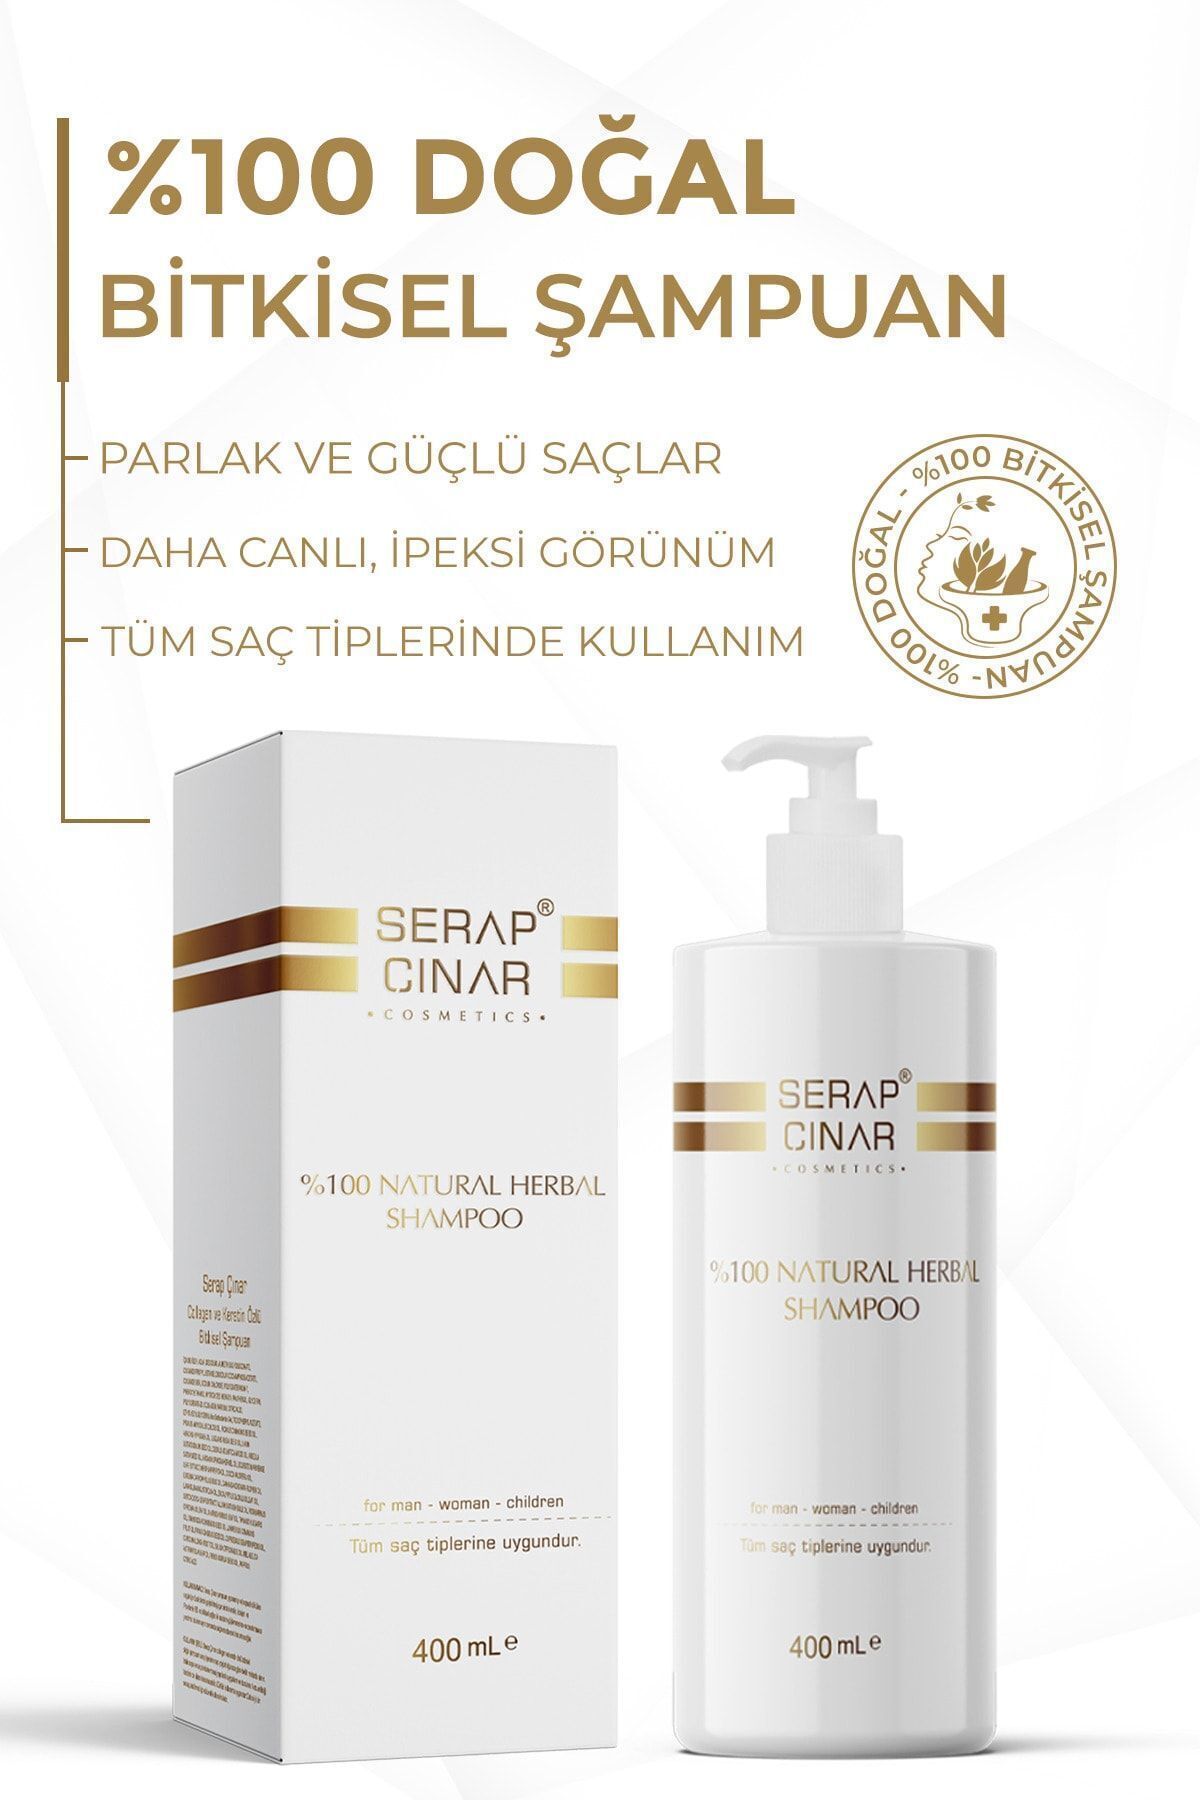 Serap Çınar Cosmetics Bitkisel Şampuan 400ml